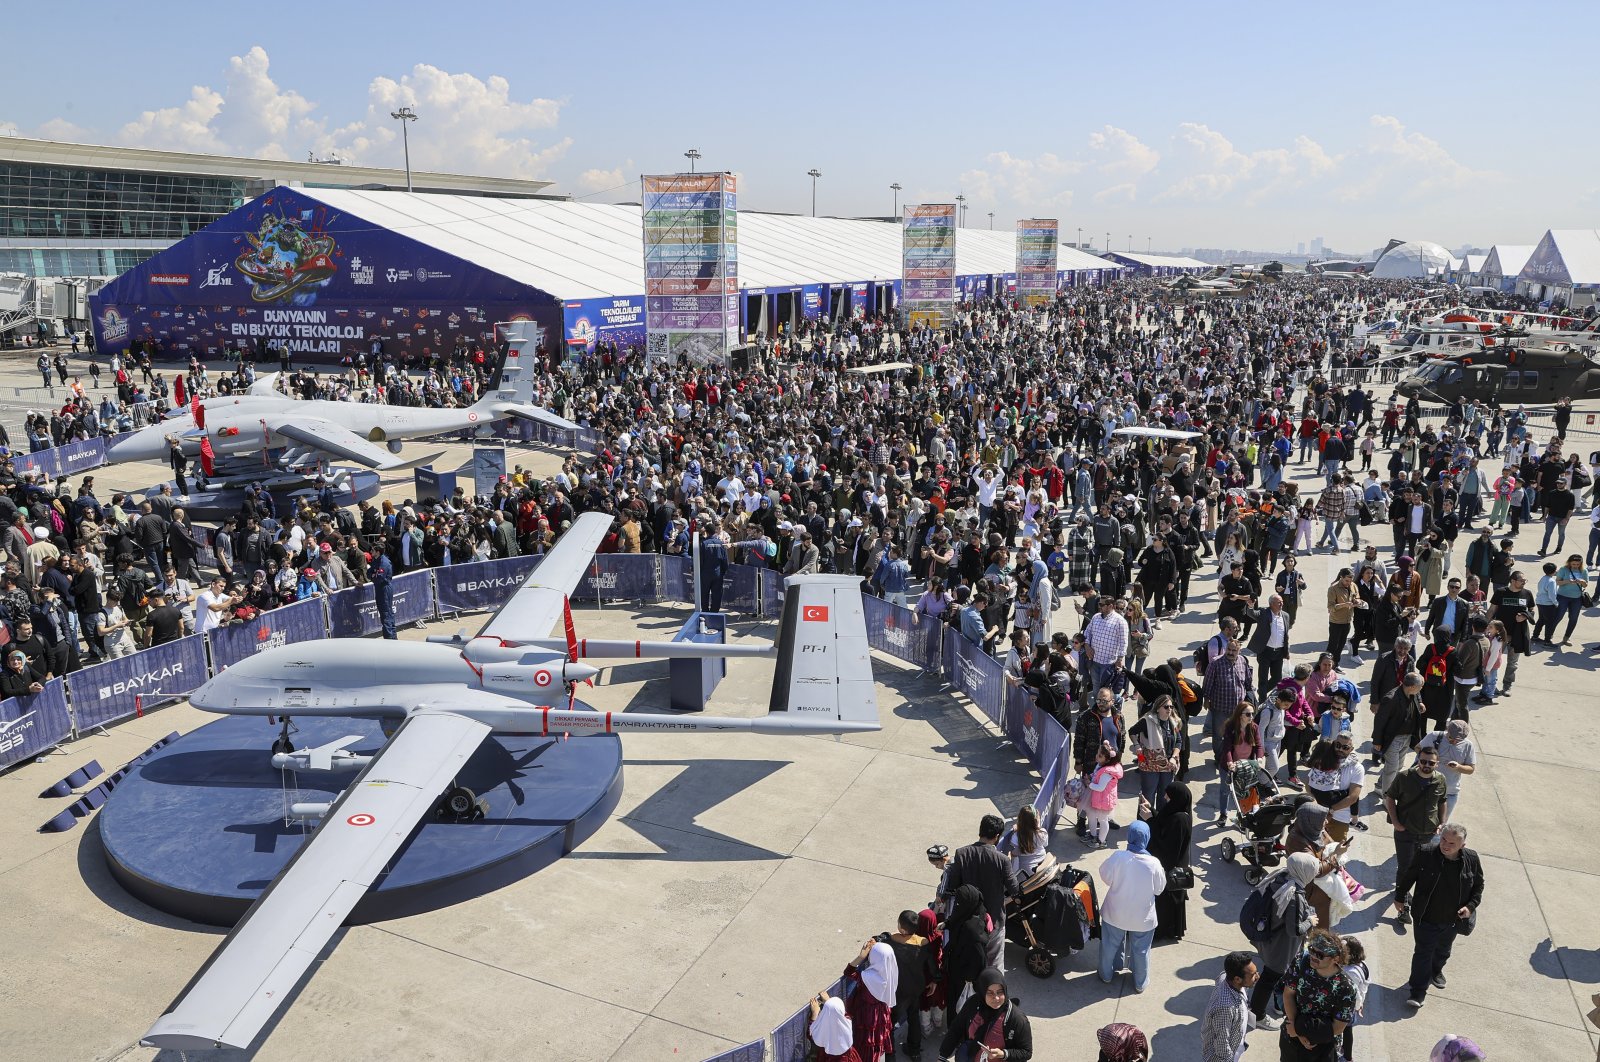 Demam Teknofest memikat rekor jumlah penggemar teknologi dan penerbangan